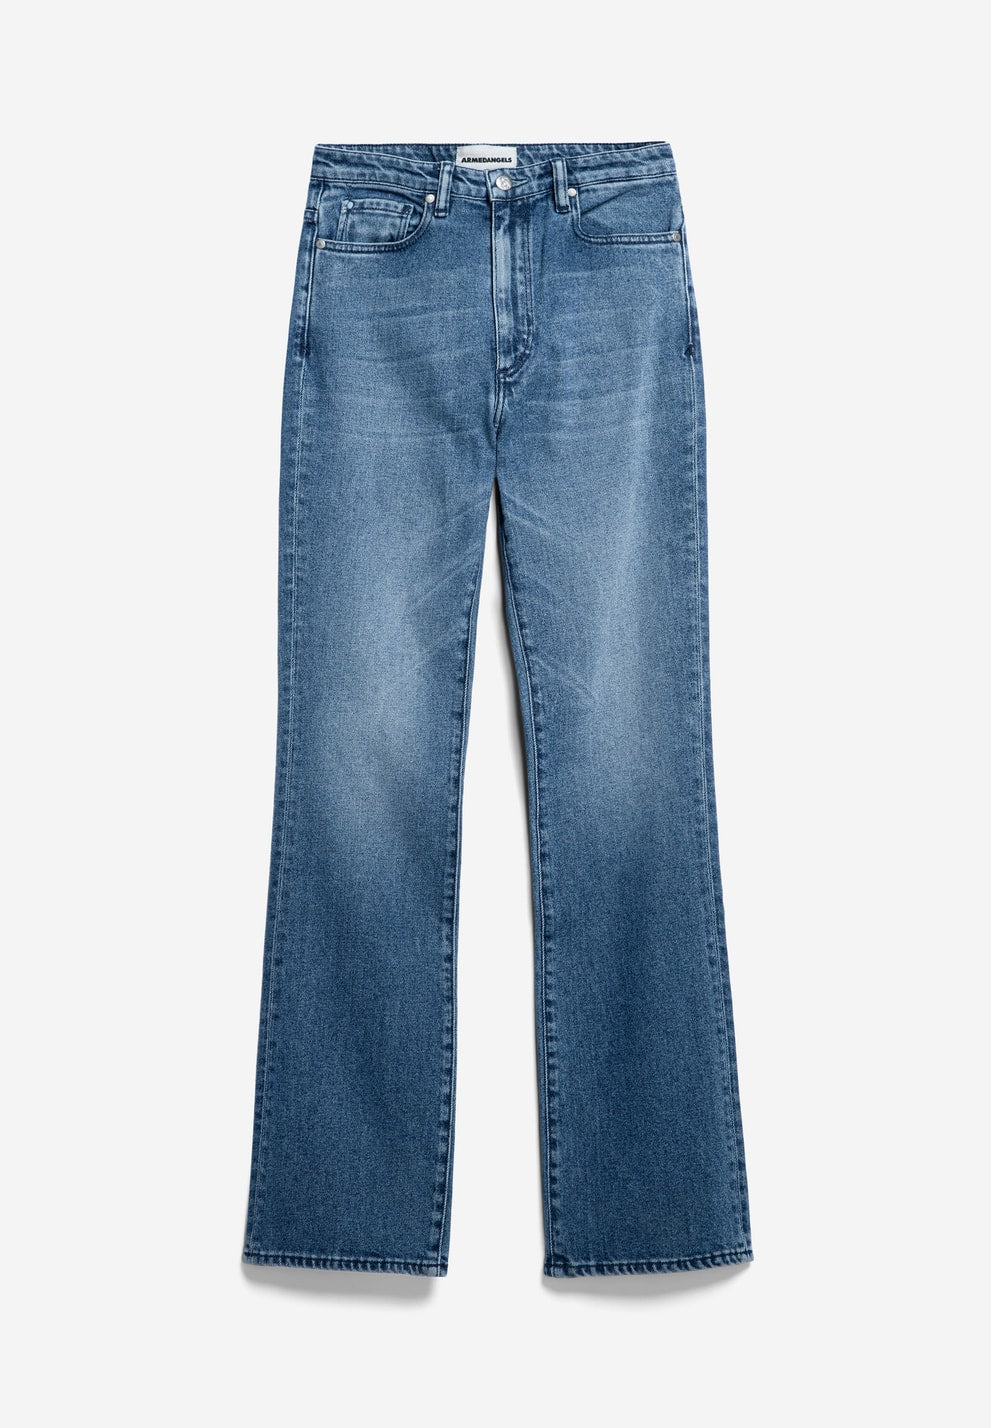 Jeans LINNAA Bootcut cenote | ARMEDANGELS